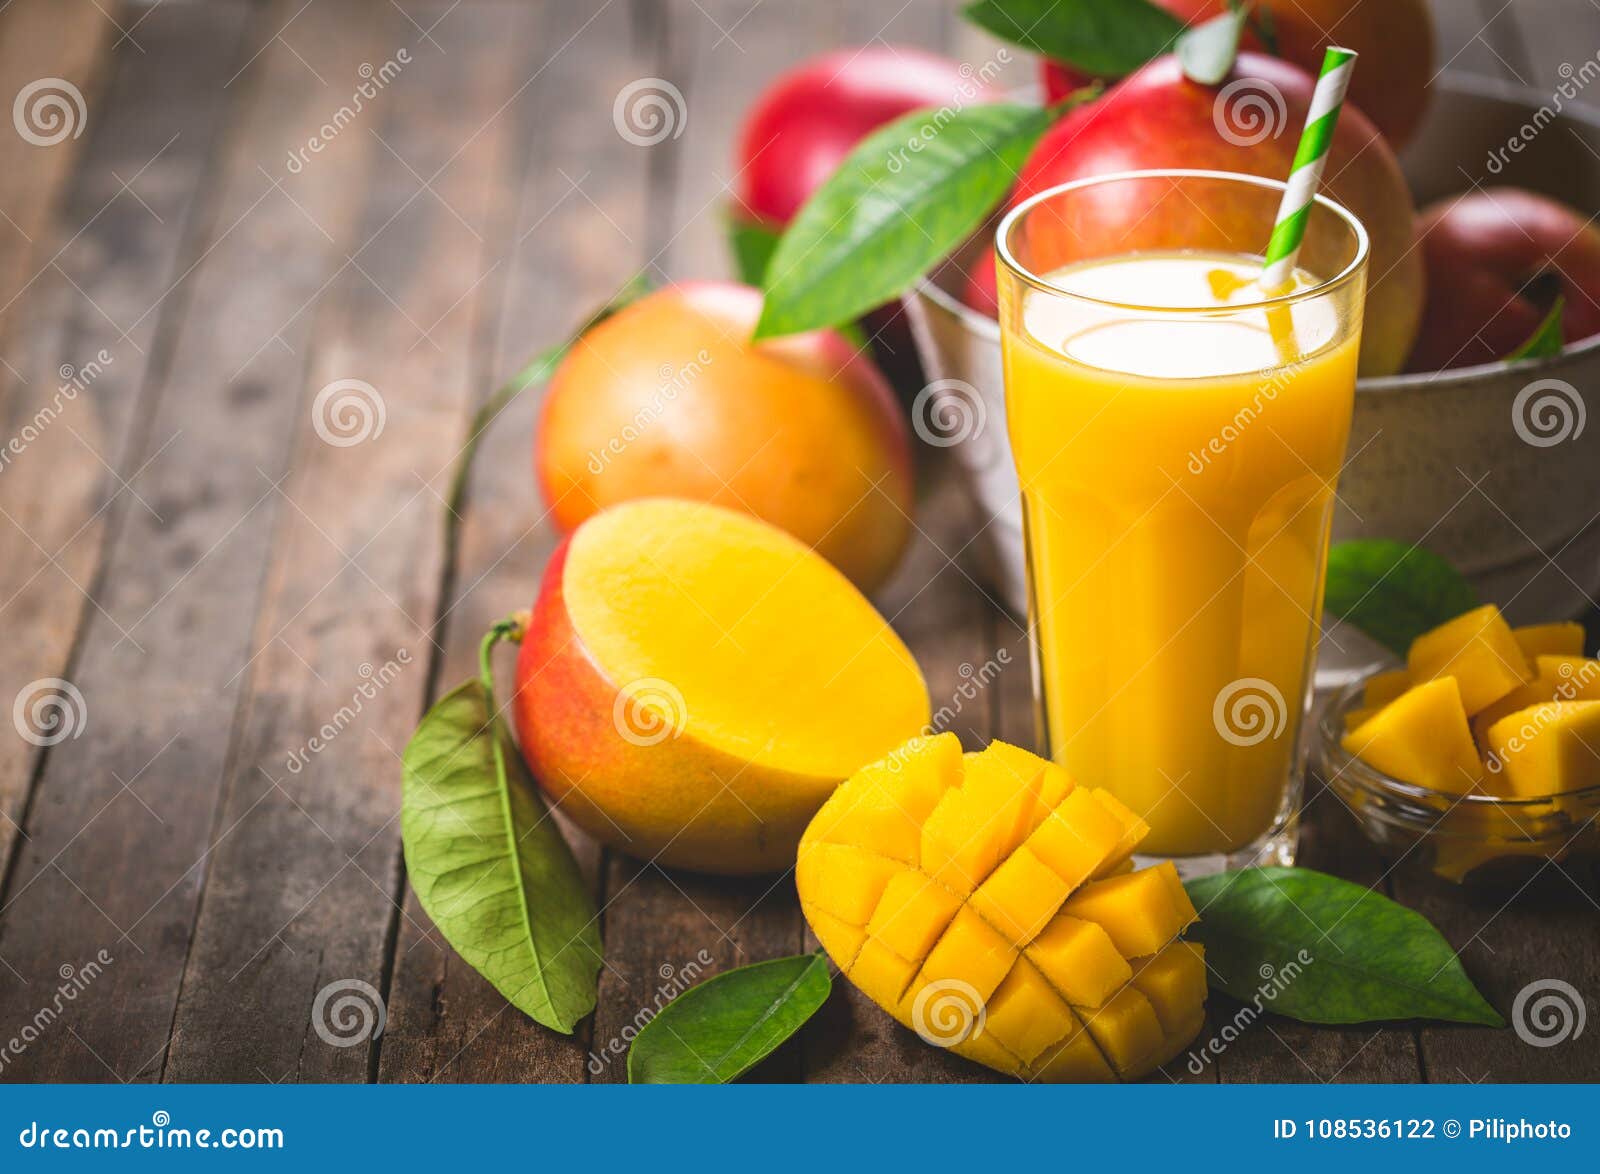 mango juice in the glass